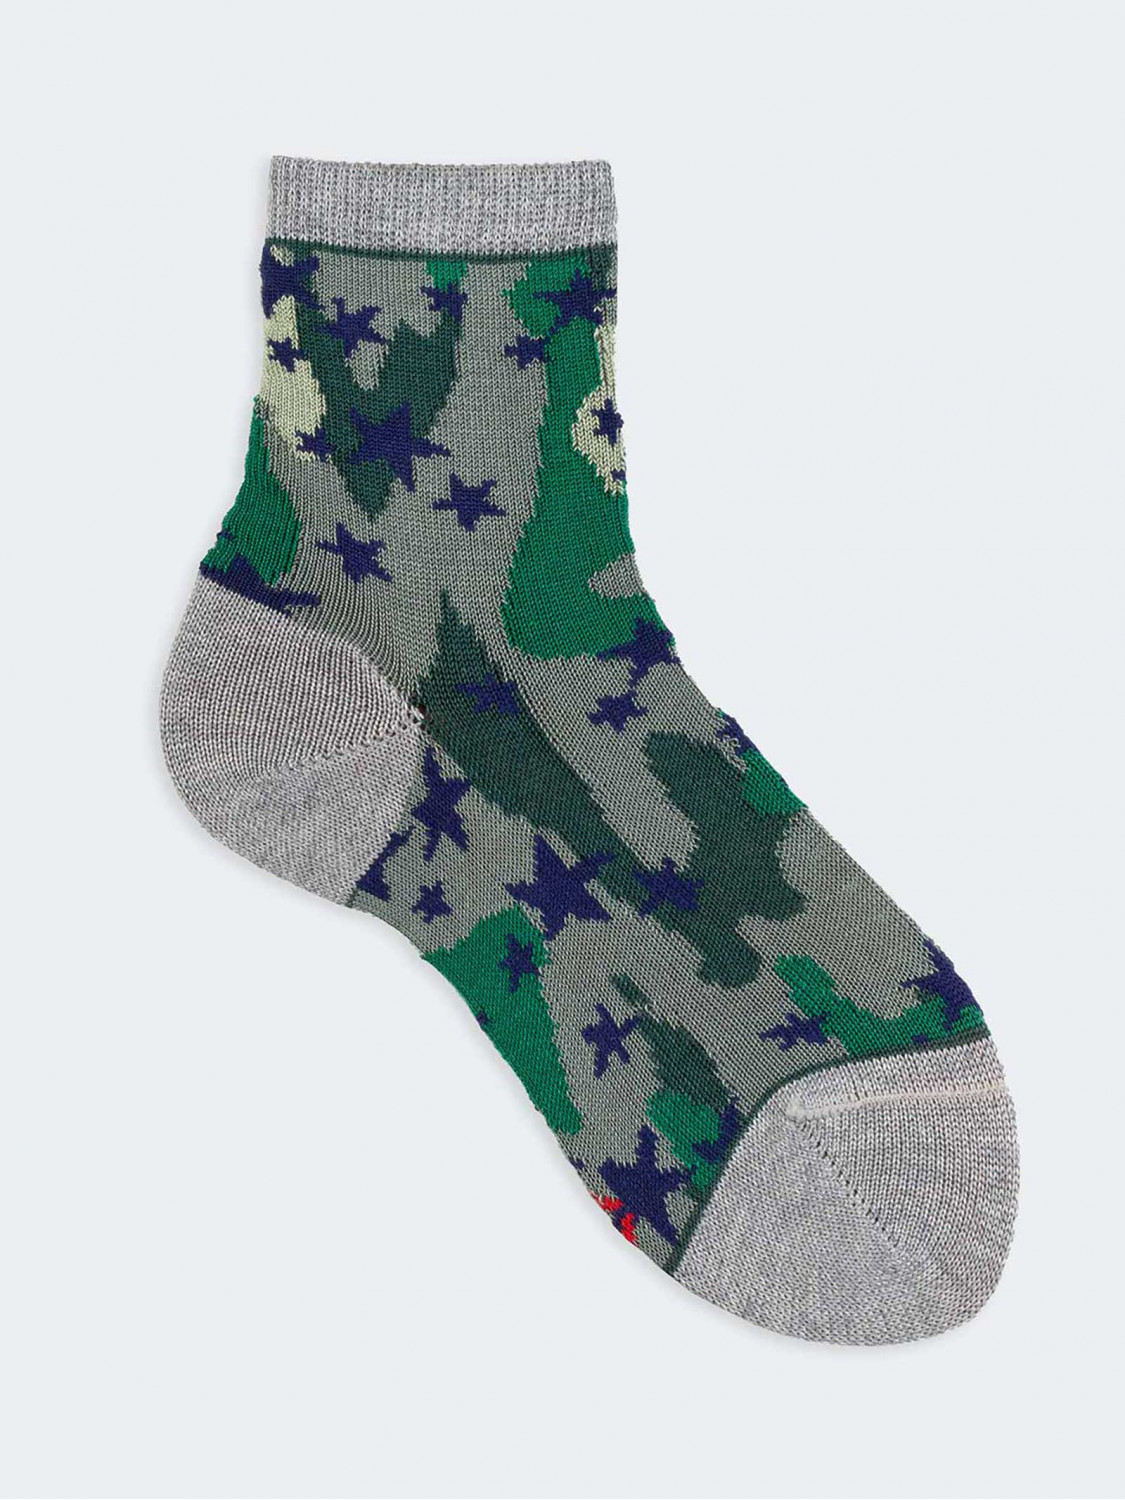 Camouflage Stars pattern Kids Crew Socks